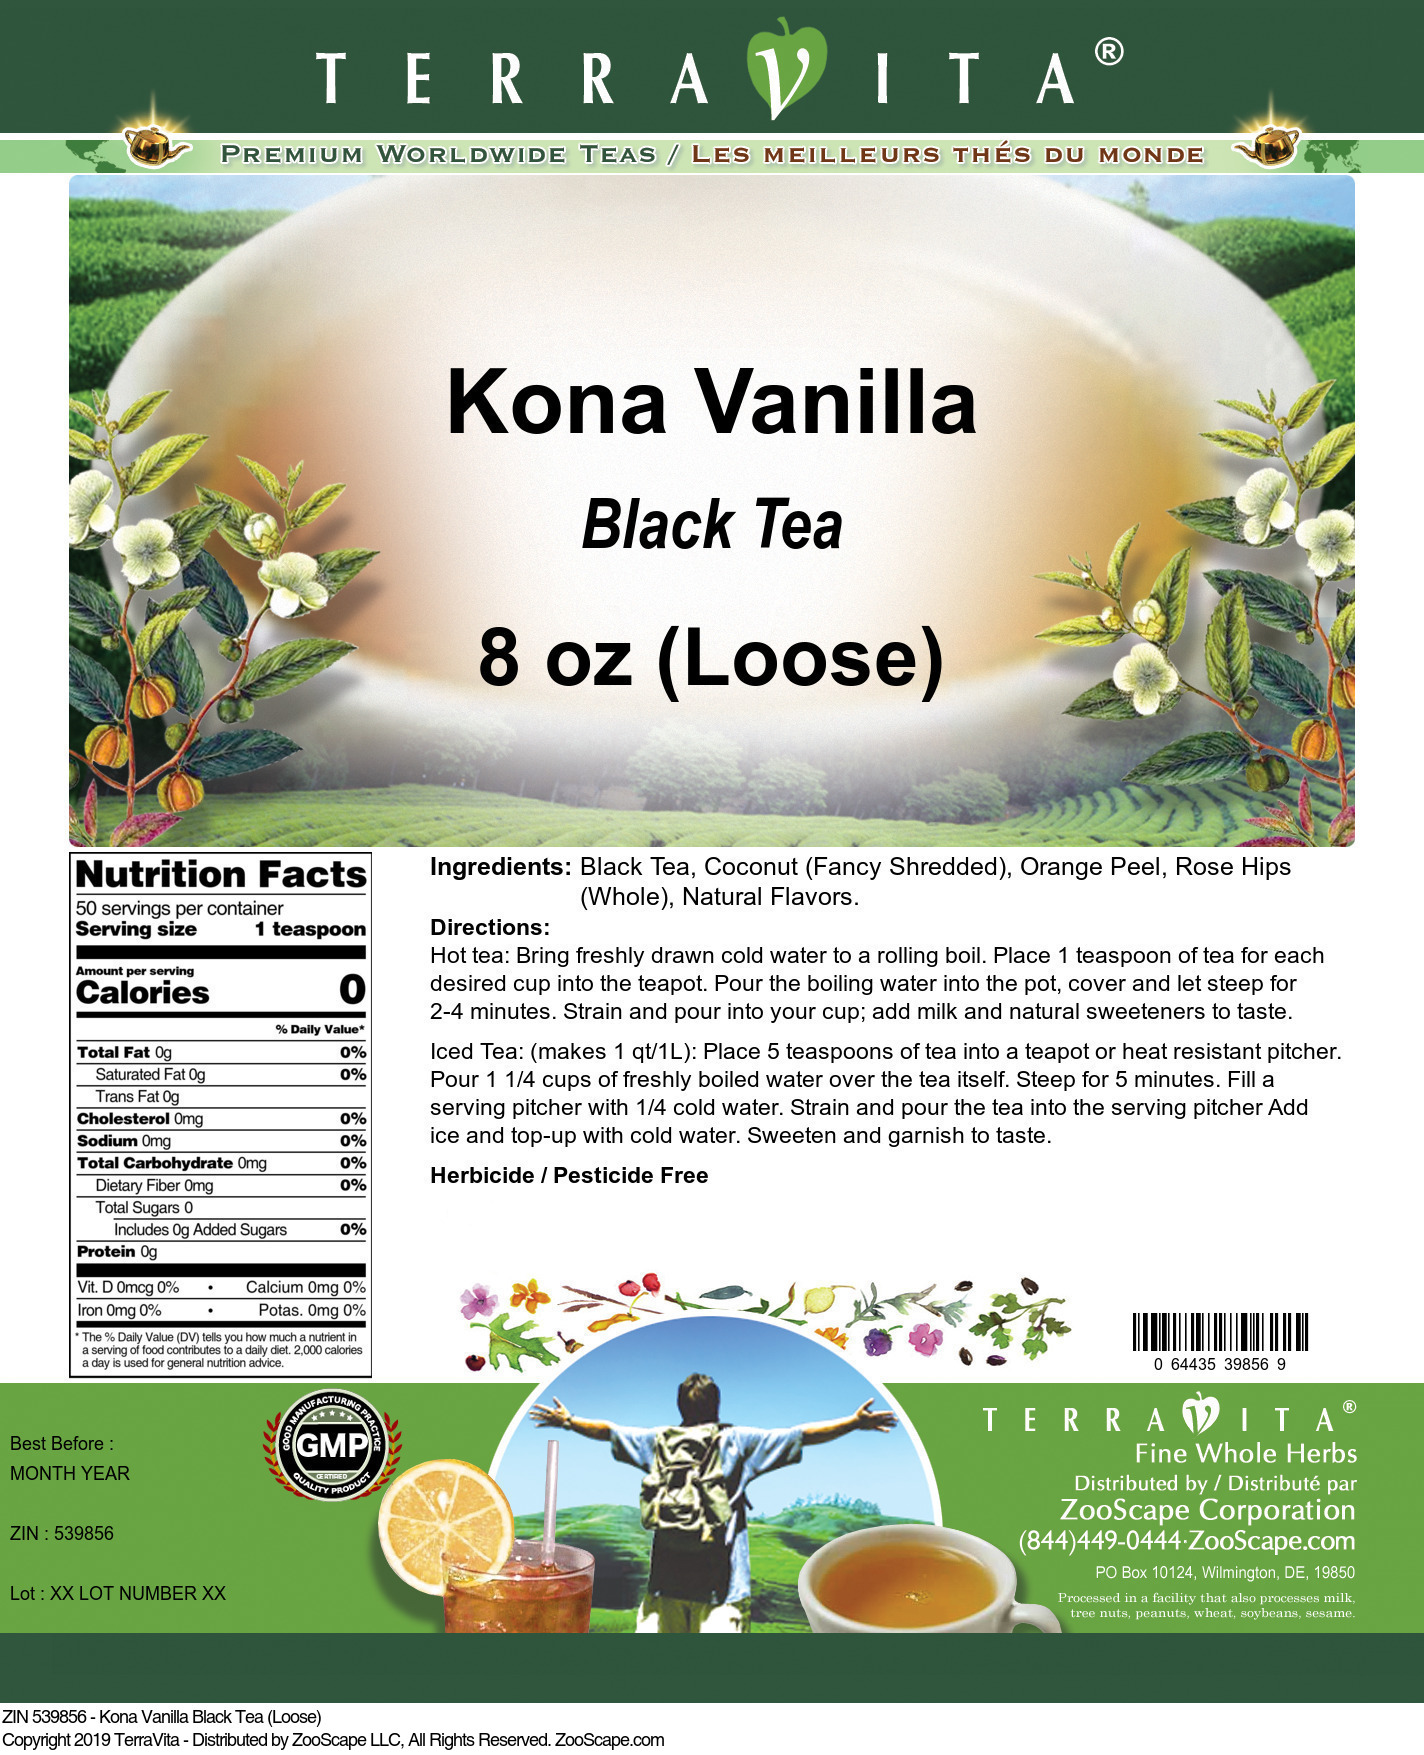 Kona Vanilla Black Tea (Loose) - Label